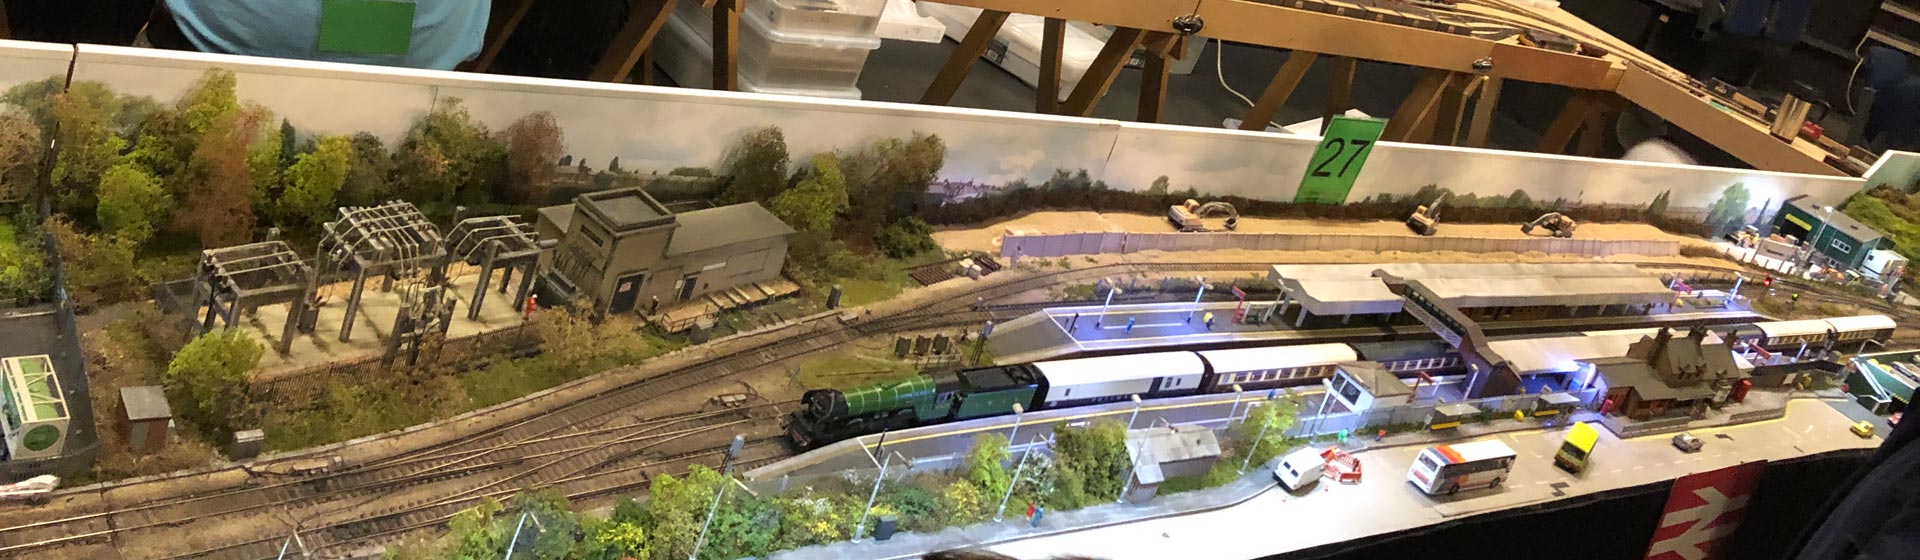 Southampton Model Railway Exhibition Layout